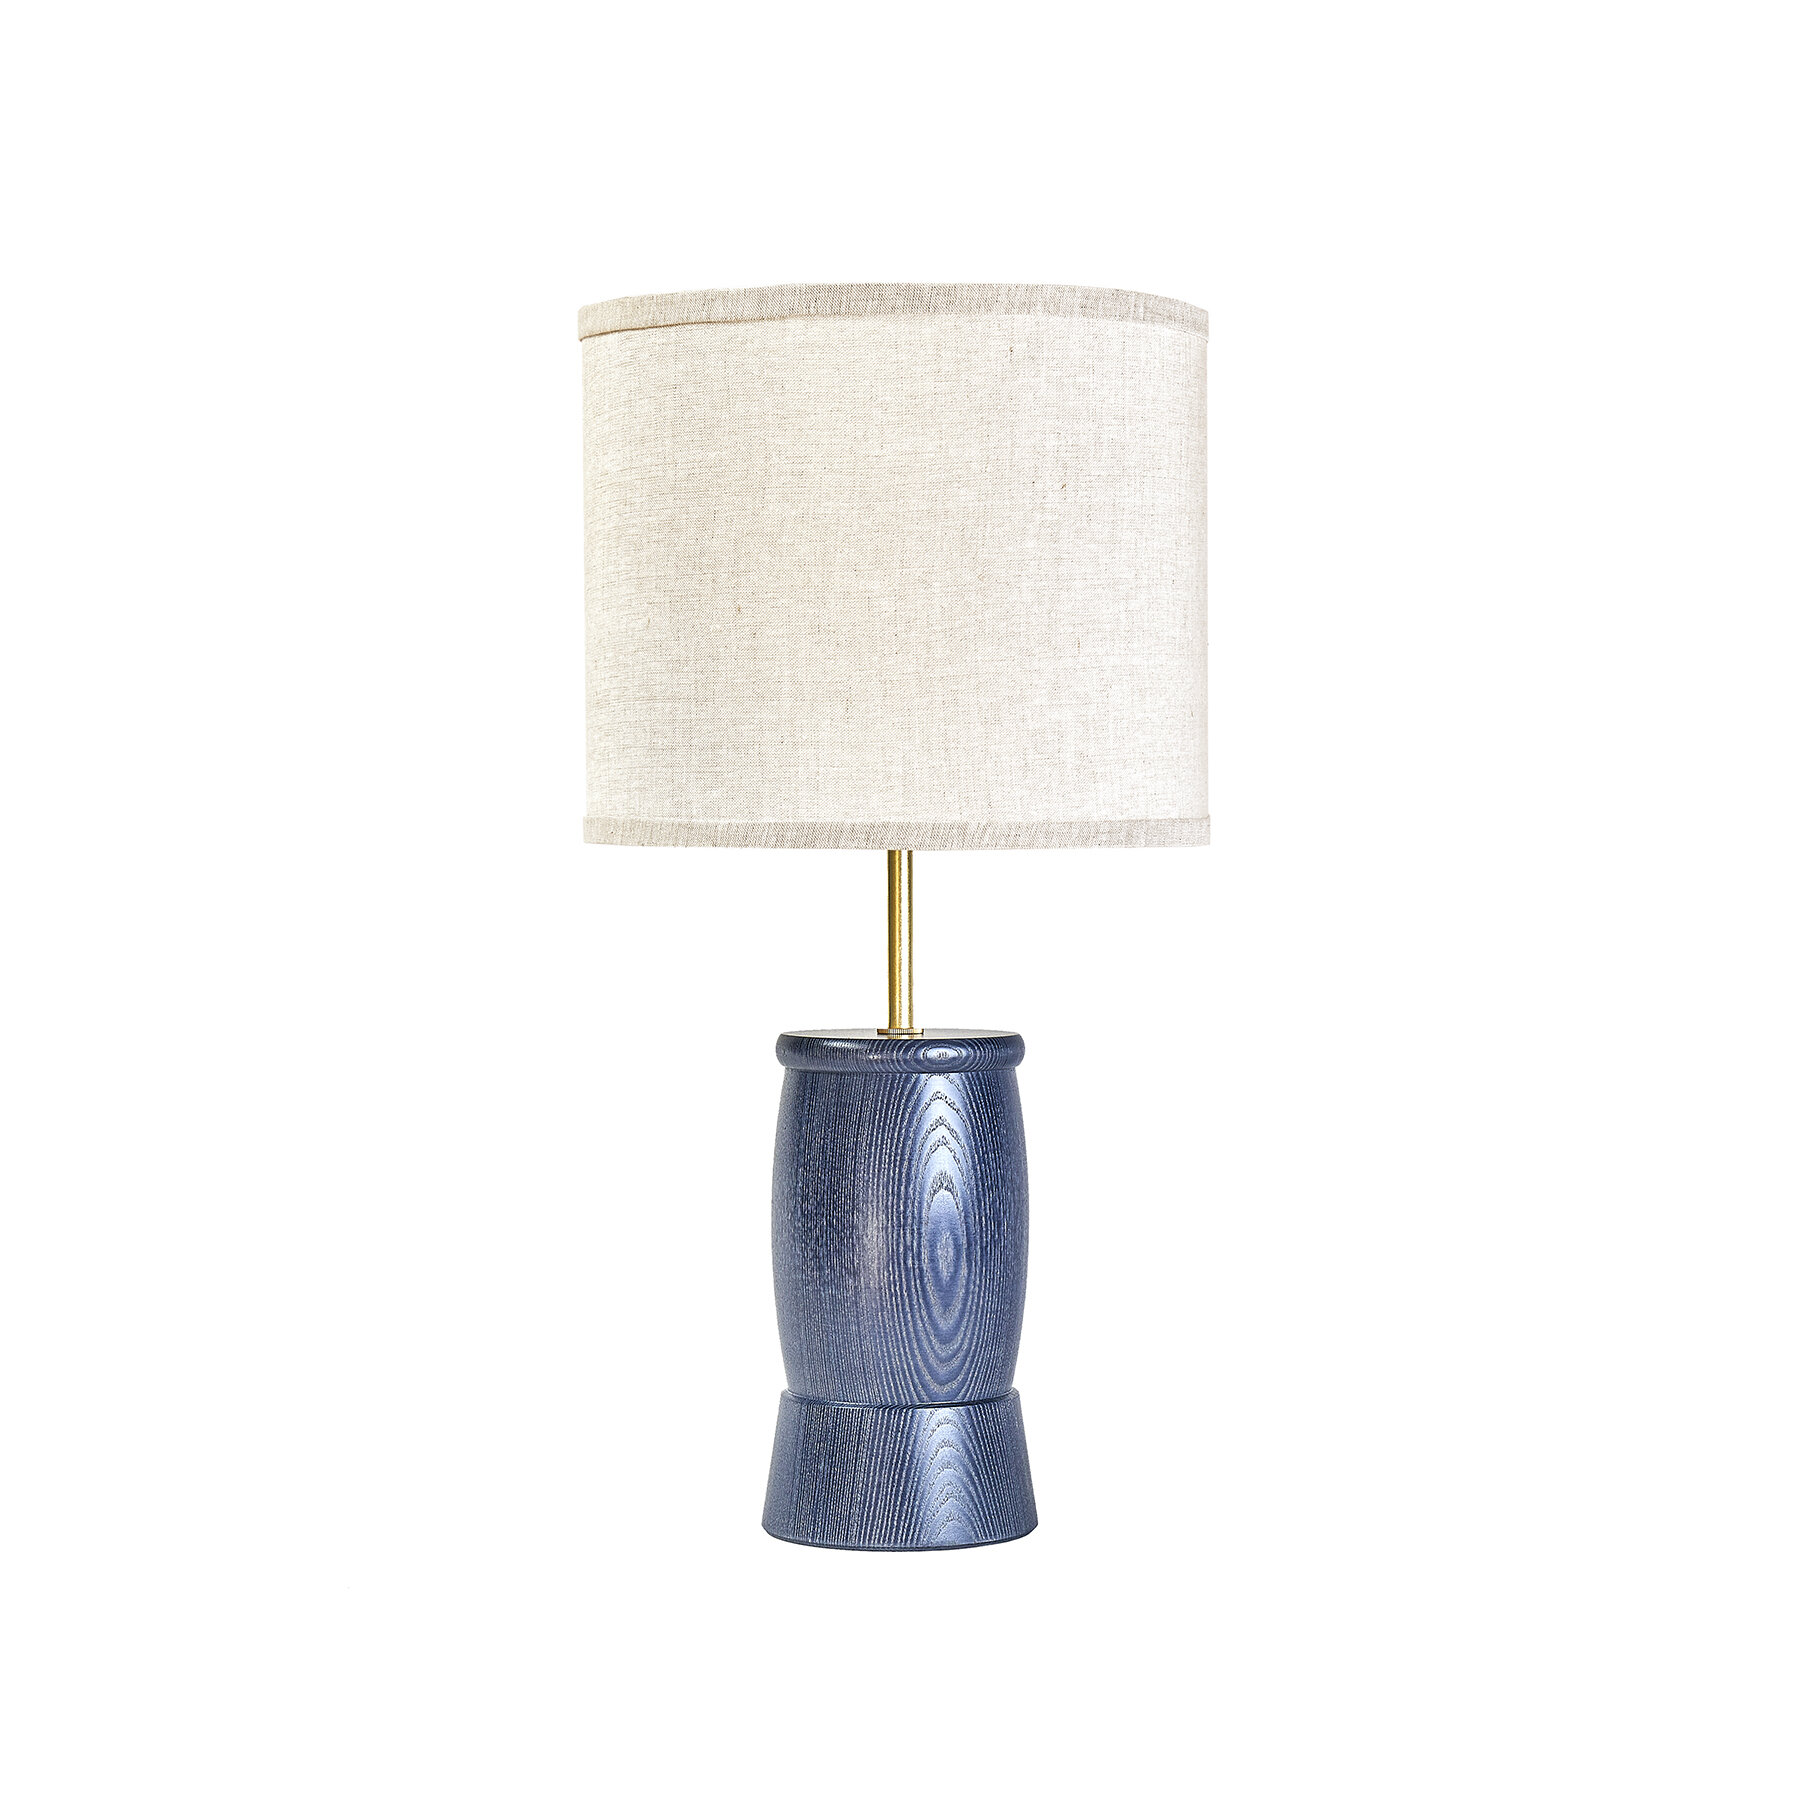 AMBOY BEDSIDE LAMP - $820